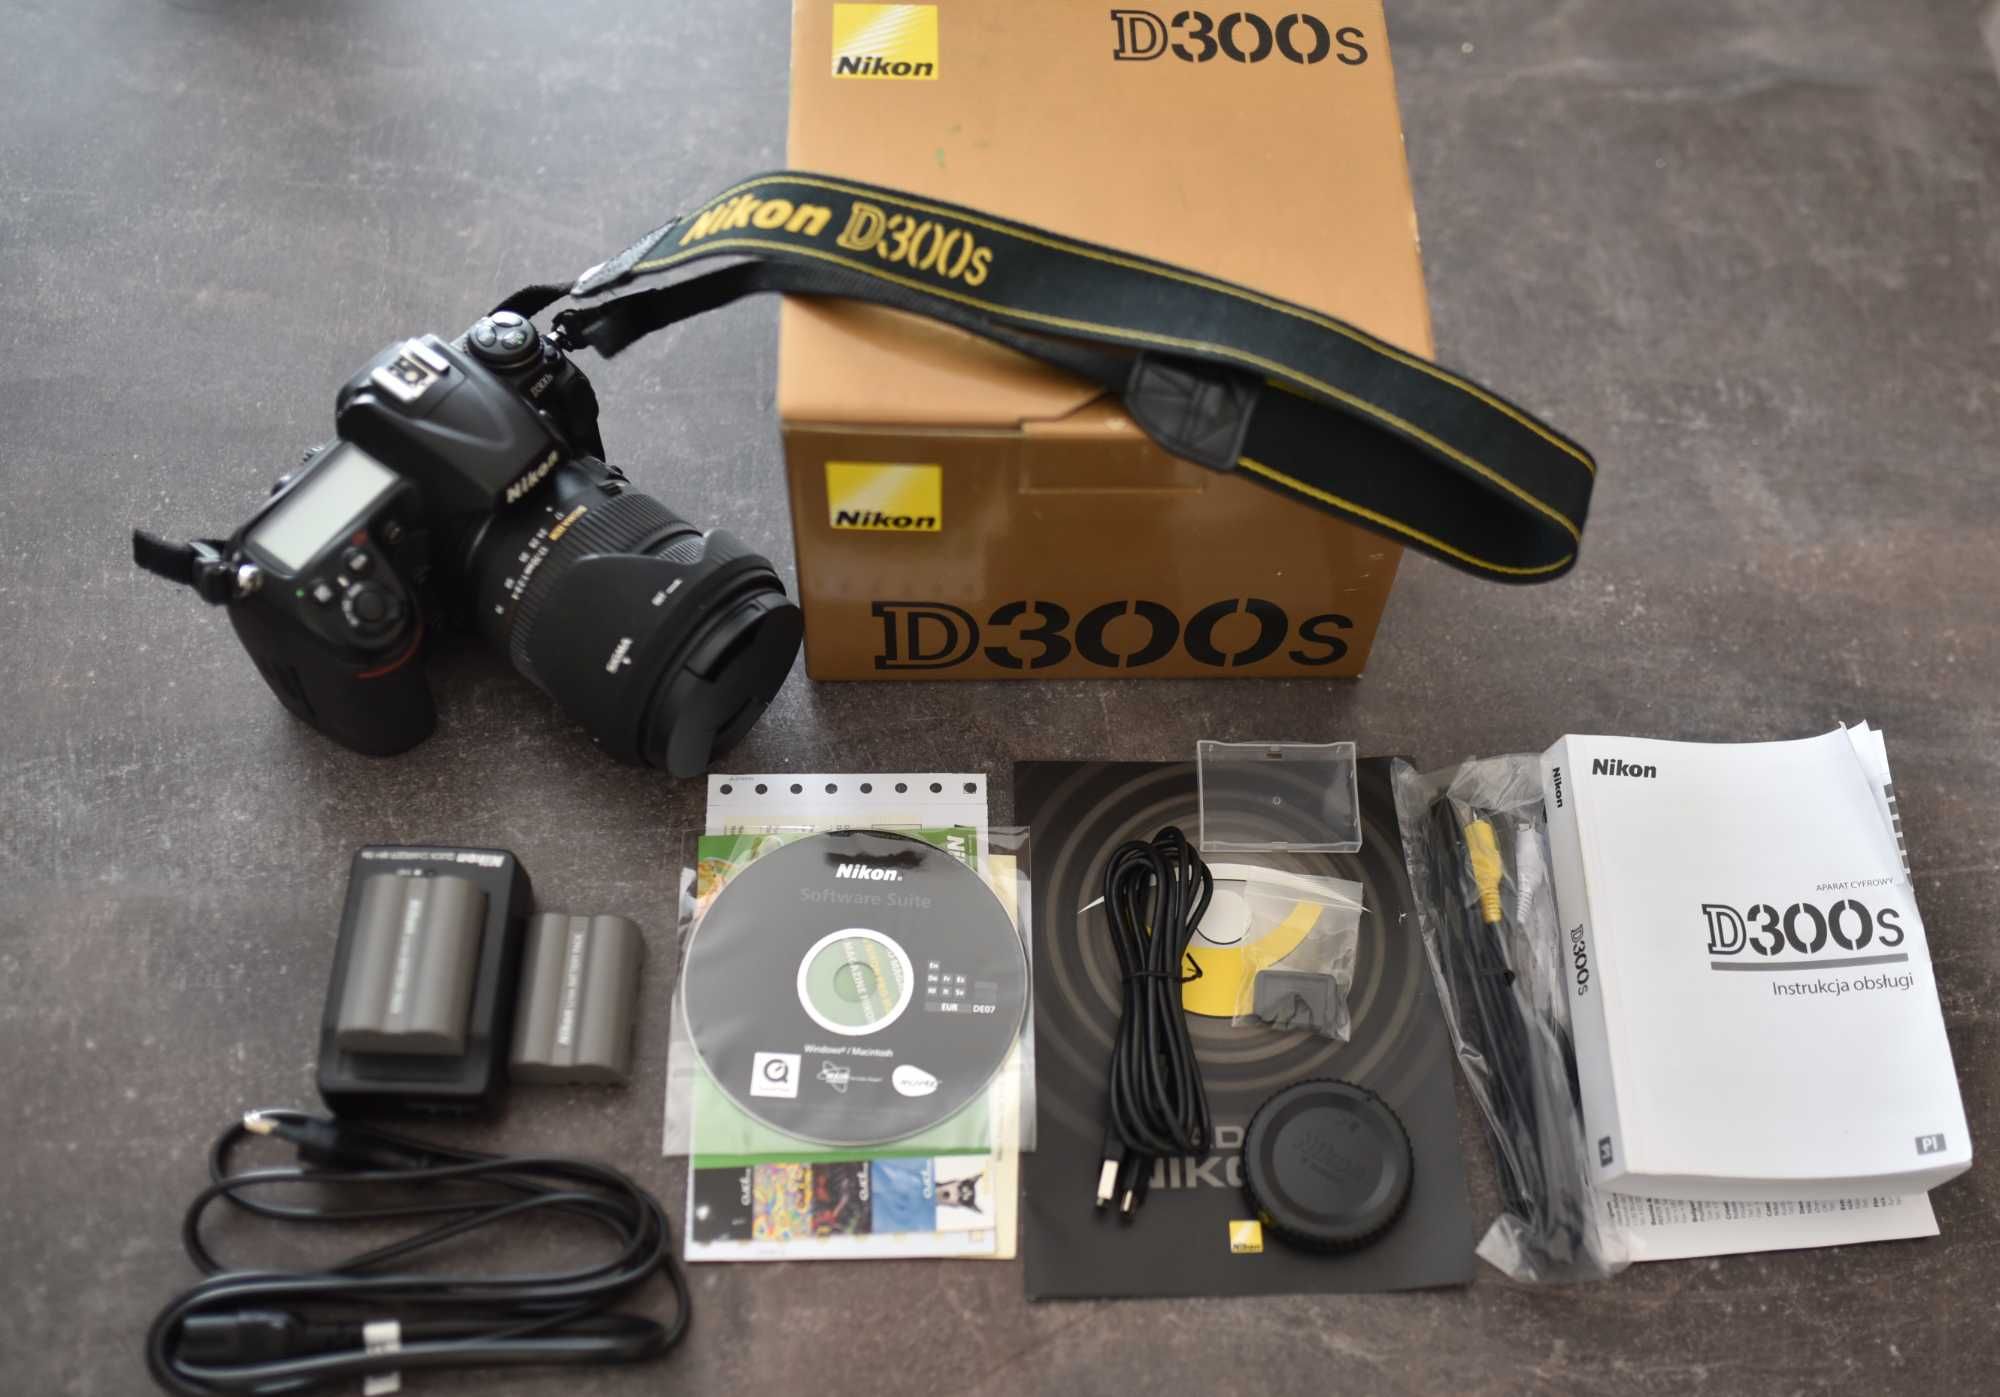 Nikon D300s+Sigma DC 17-70mm.1:2.8-4 macro